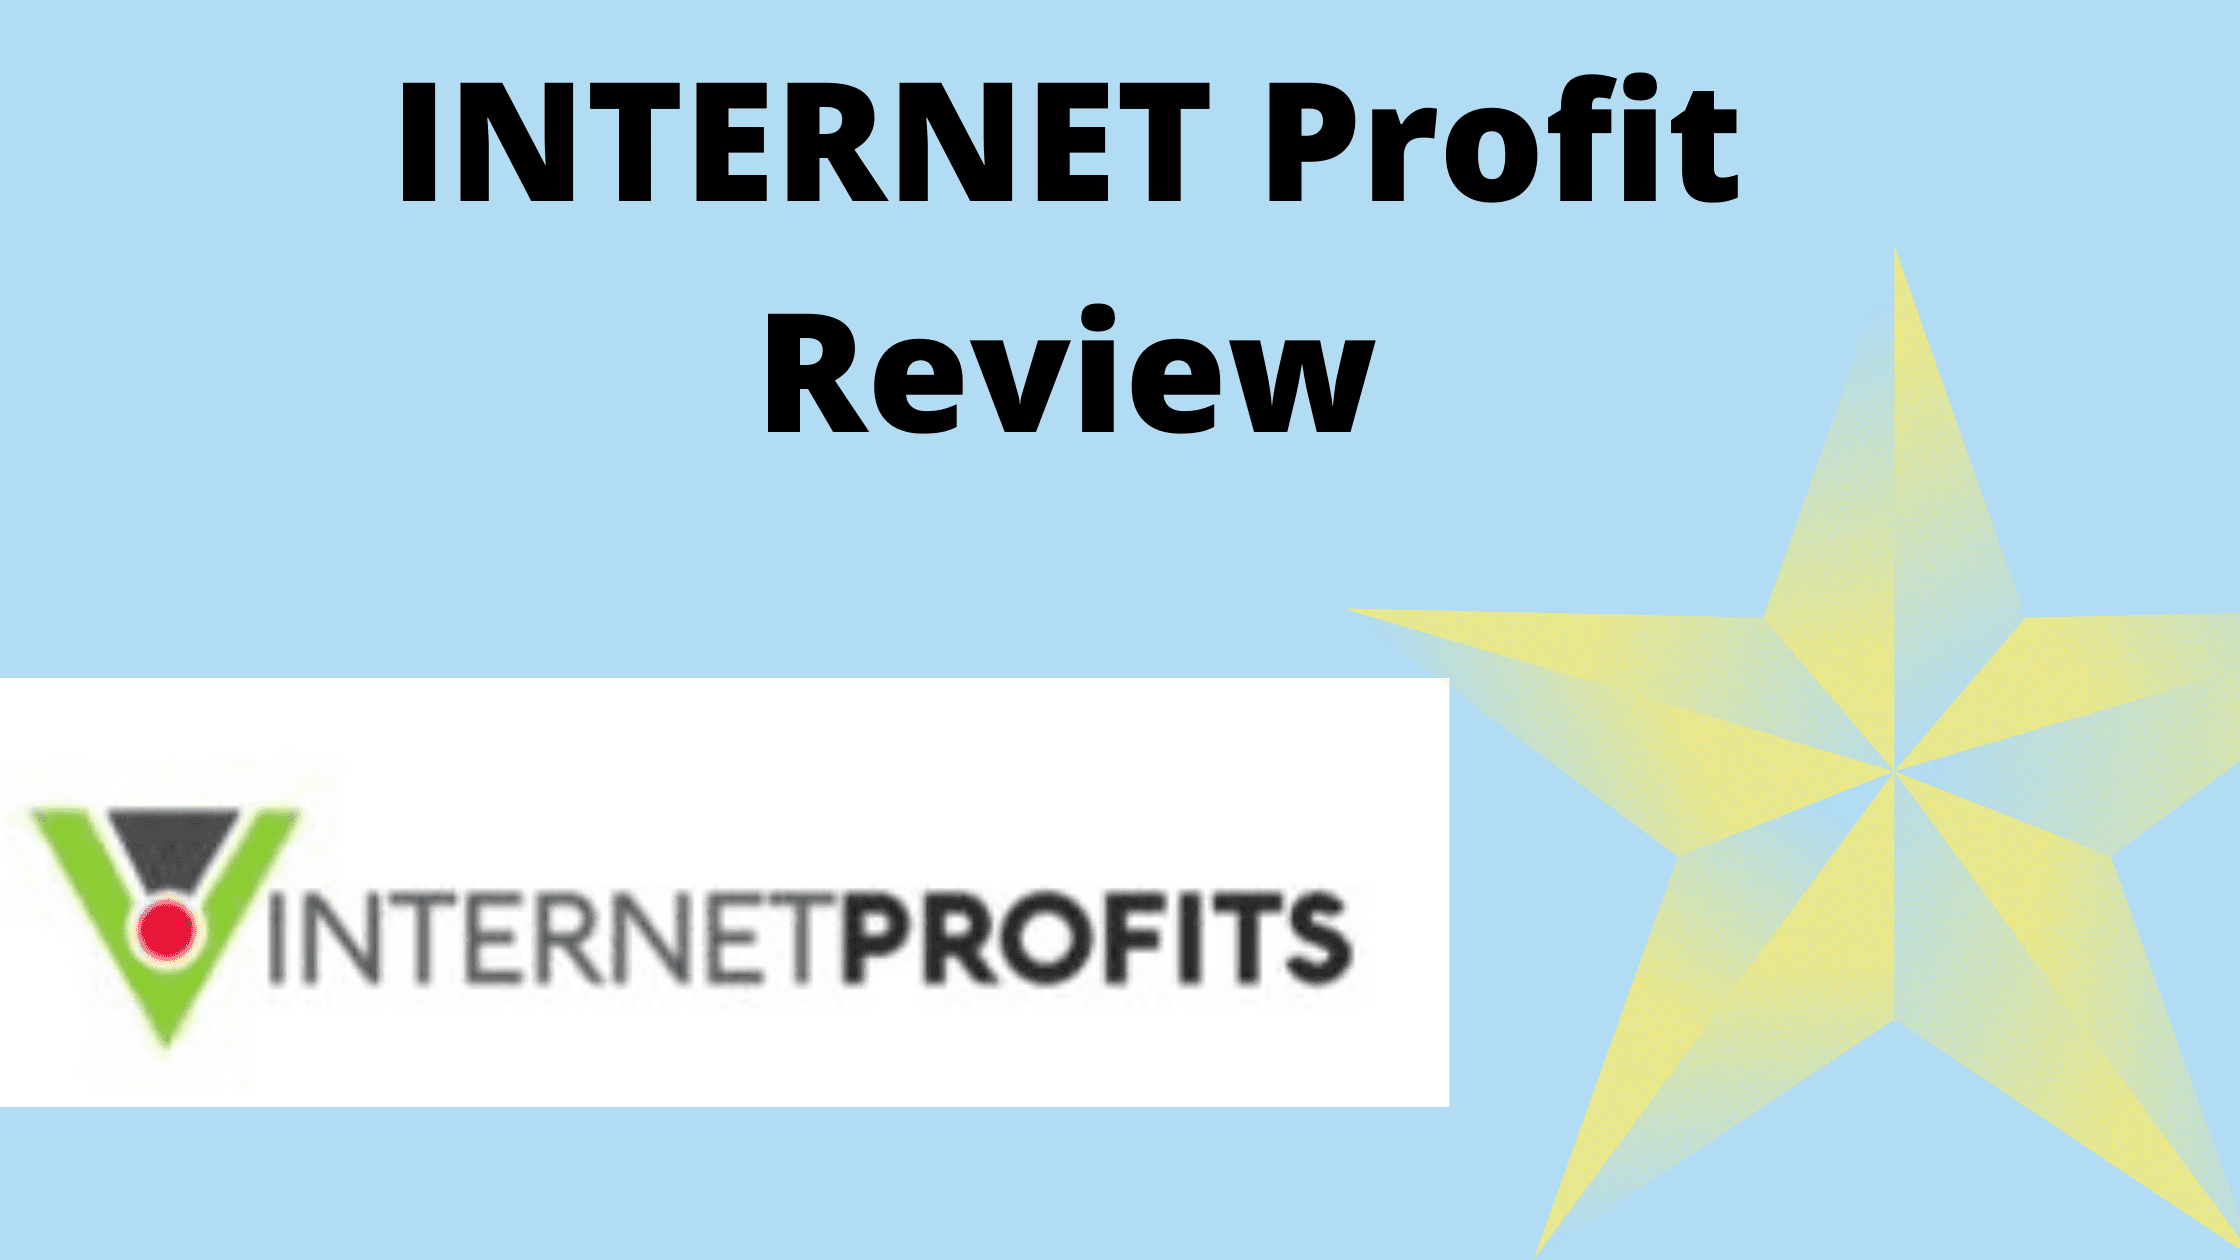 Internet Profits